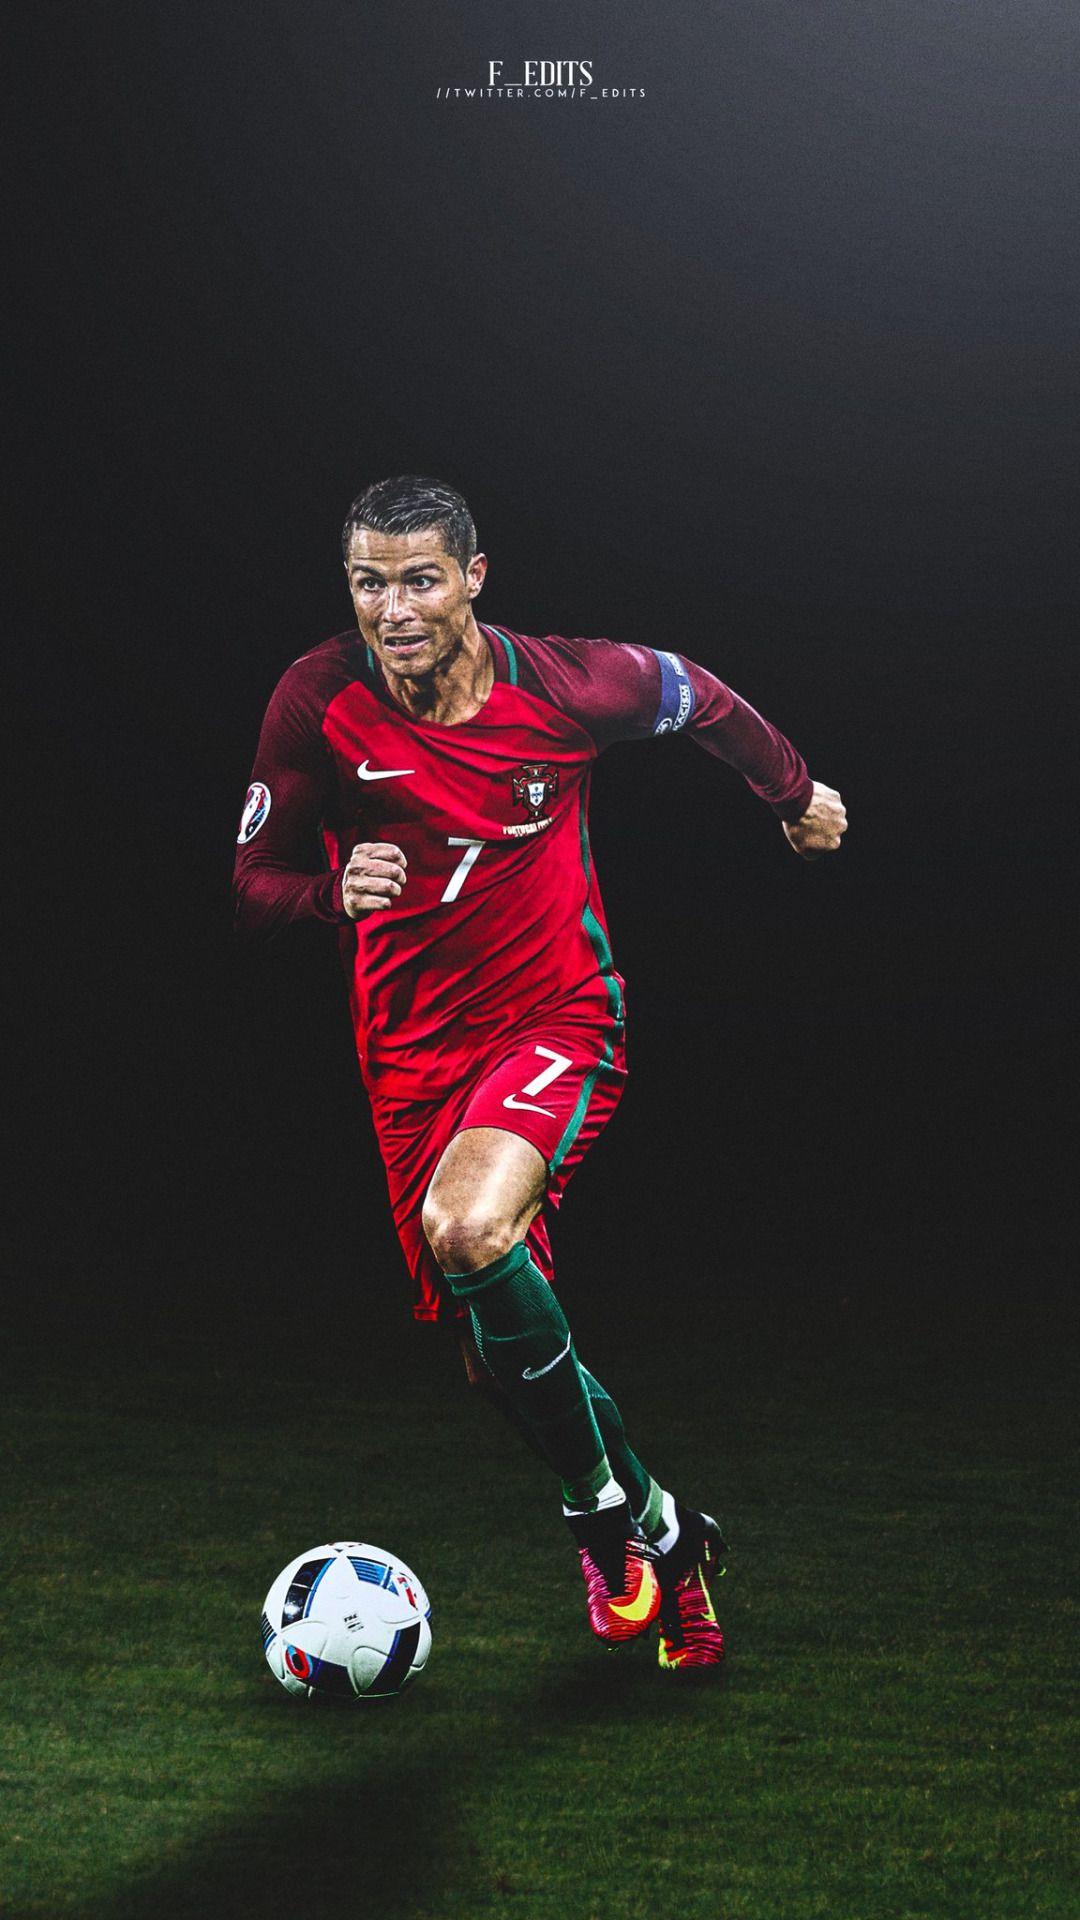 UEFA TEAM OF THE YEAR. Striker. Cristiano Ronaldo mobile wallpaper. Cristiano ronaldo wallpaper, Cristiano ronaldo, Cristiano ronaldo cr7